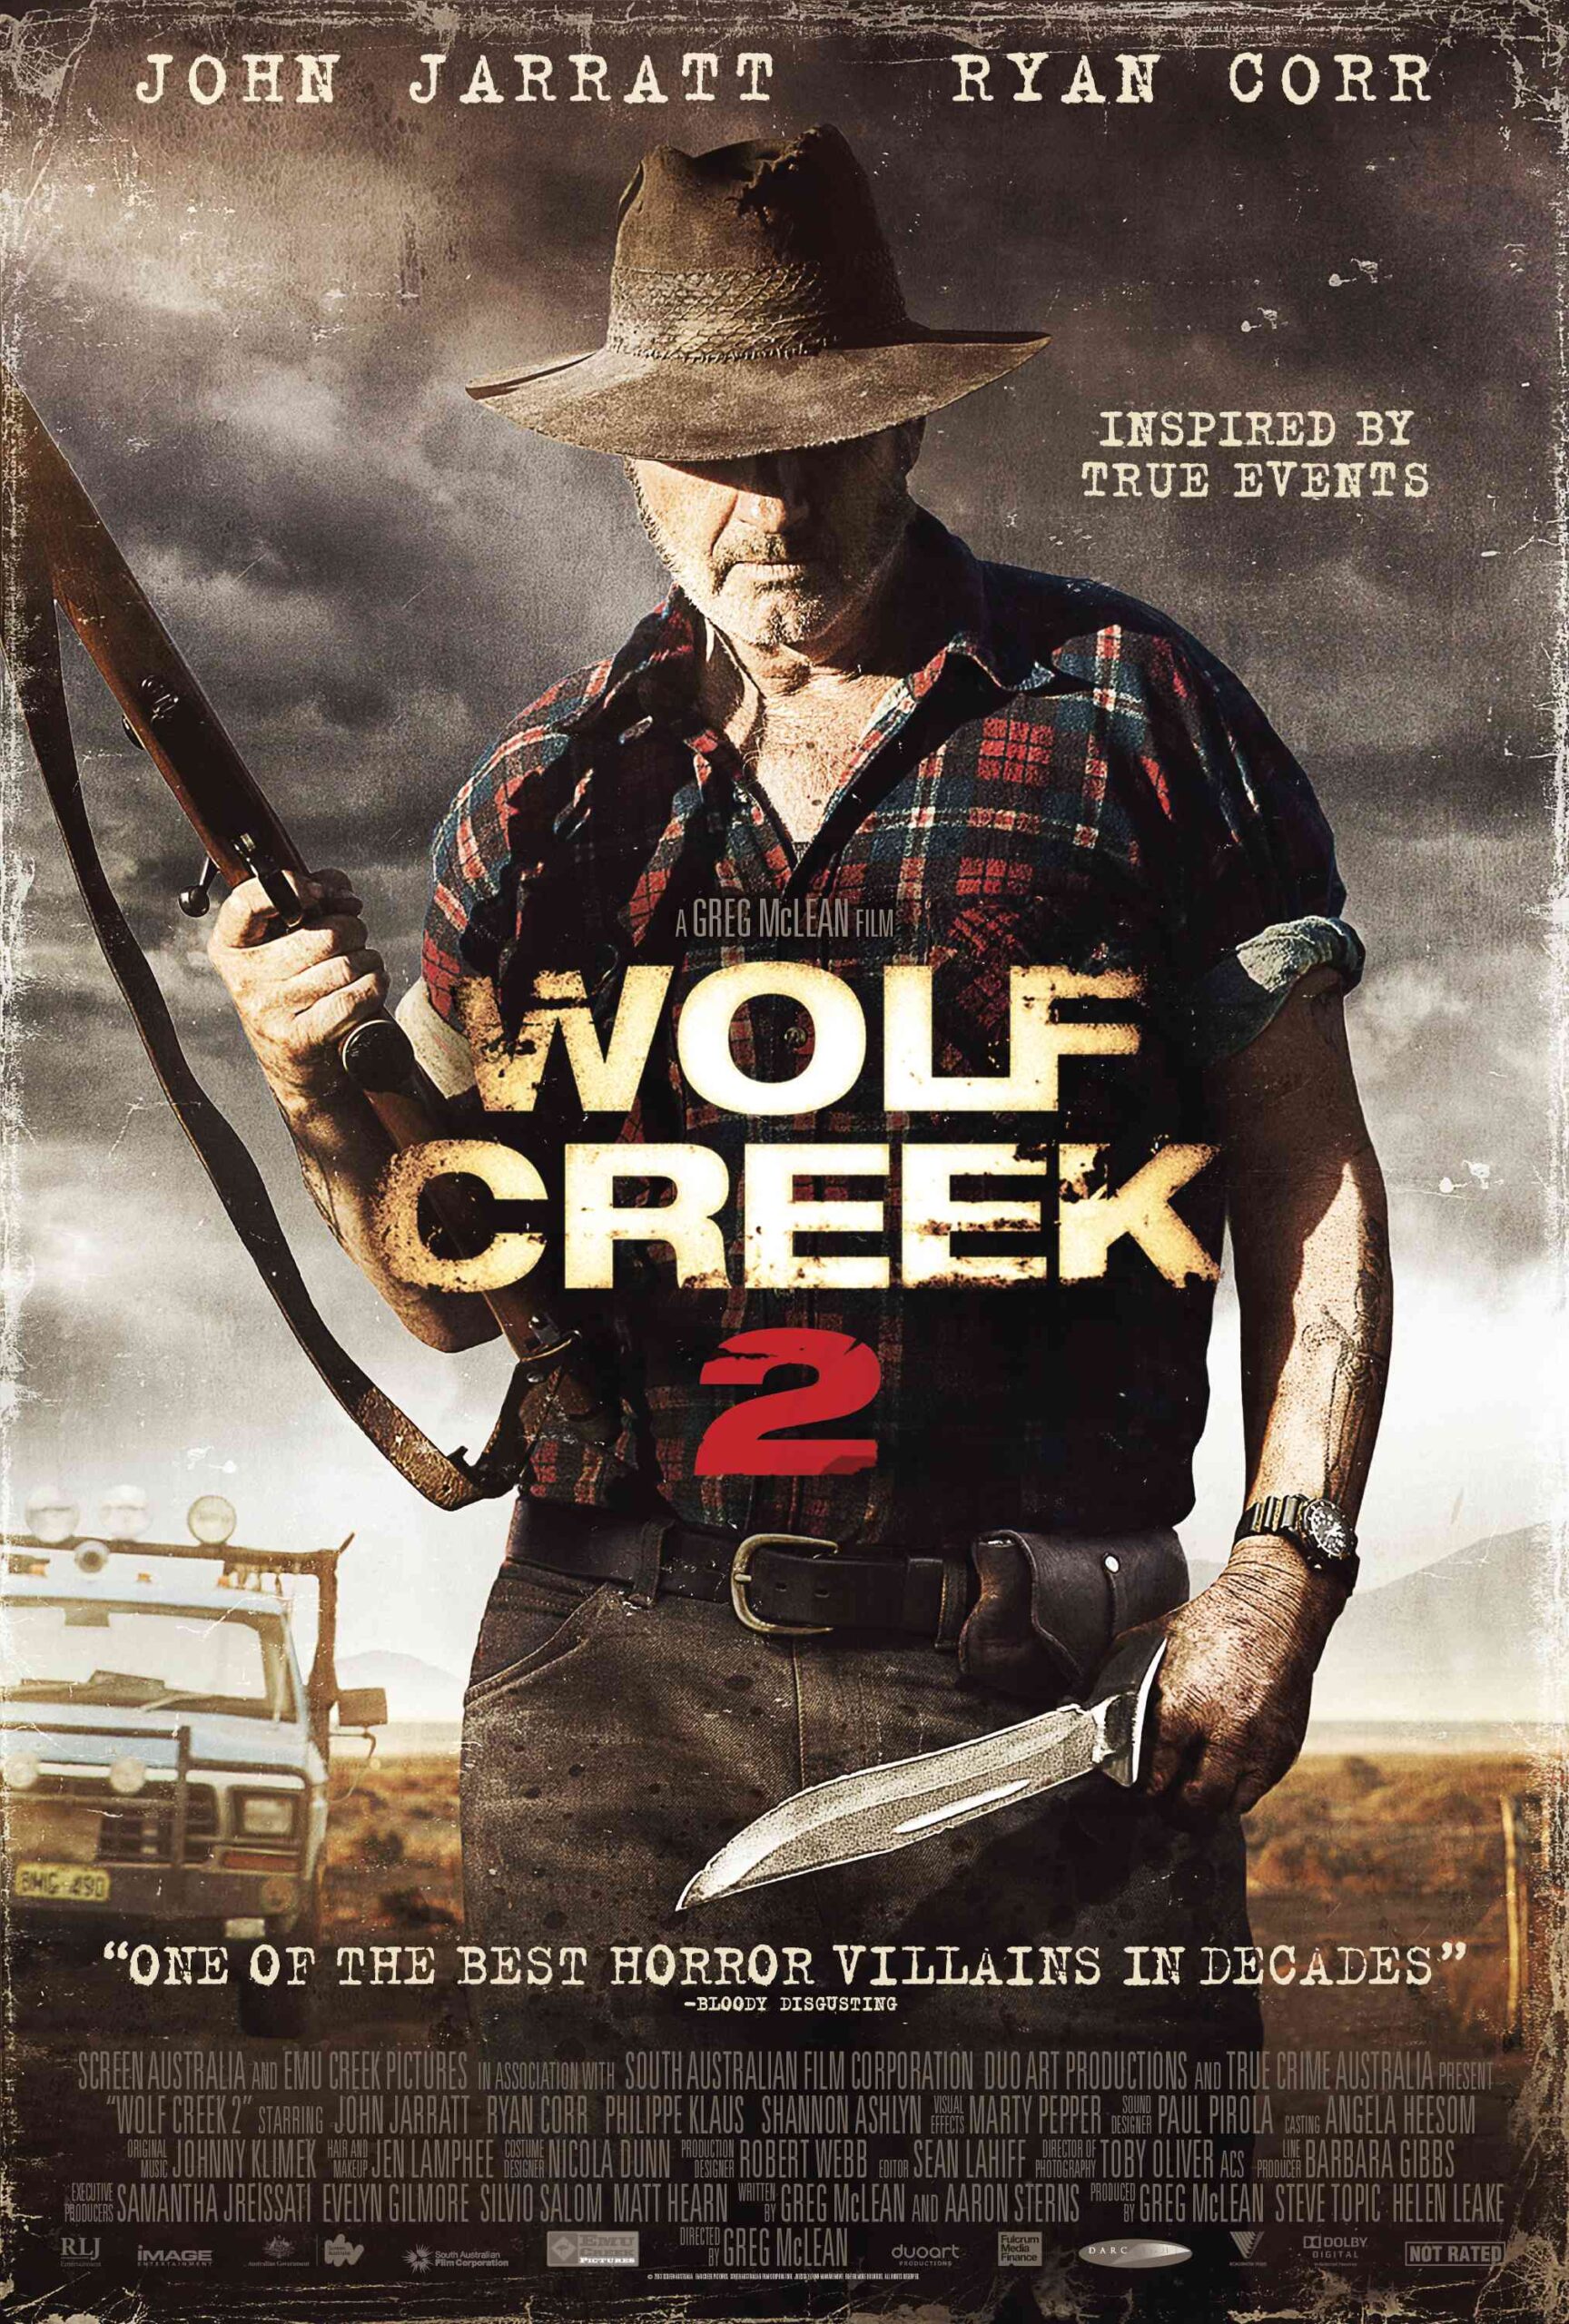 Wolf Creek 2 (2013) [Horror] - Netnaija Movies